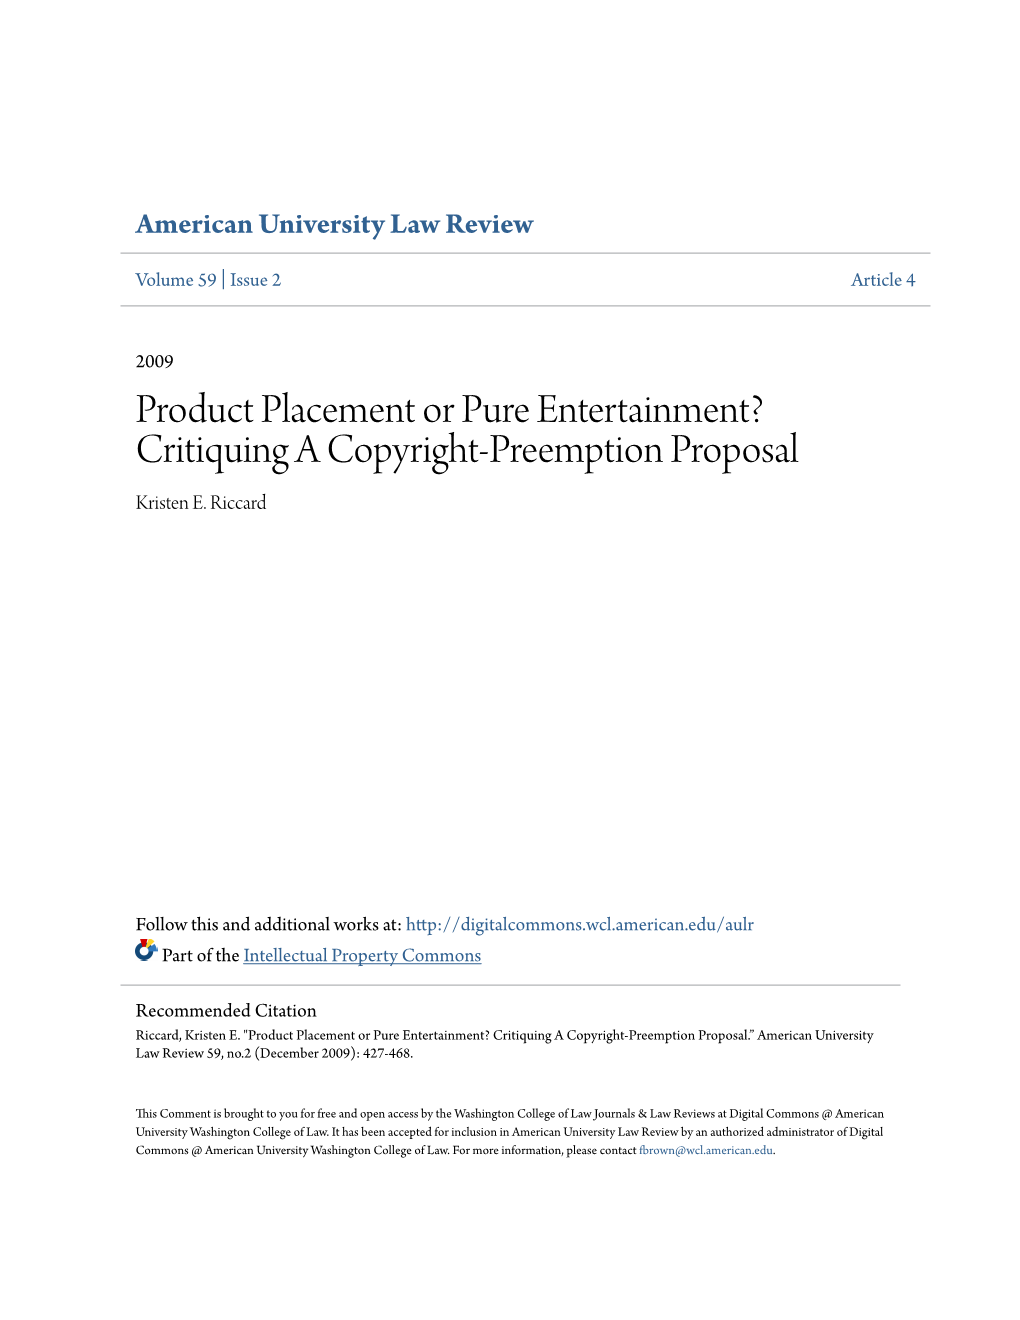 Product Placement Or Pure Entertainment? Critiquing a Copyright-Preemption Proposal Kristen E